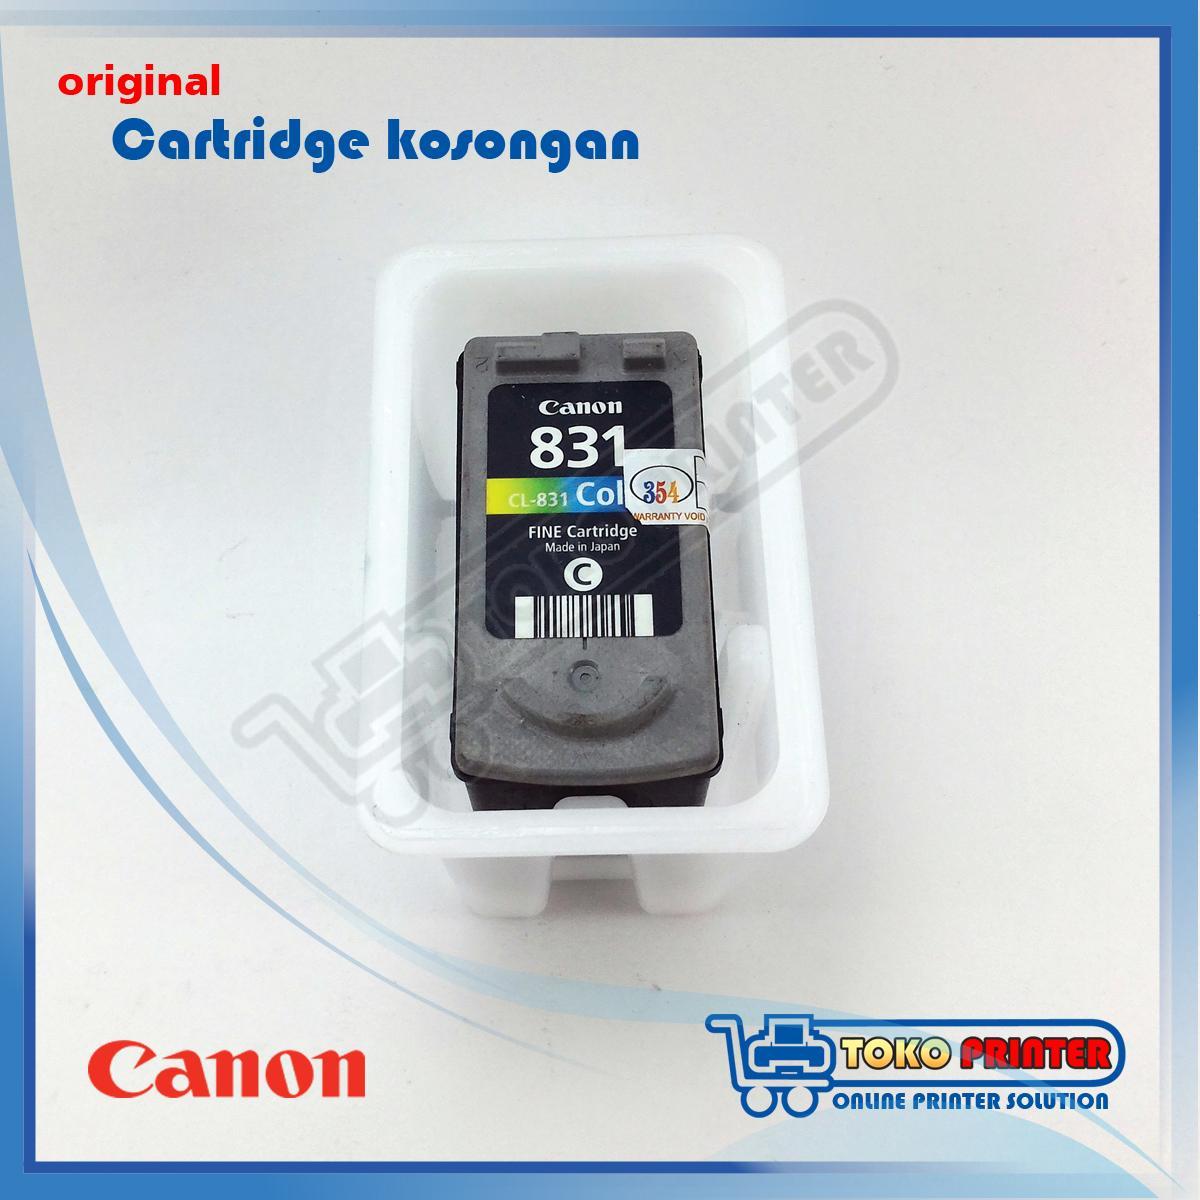 Cartridge Kosongan Canon CL-831